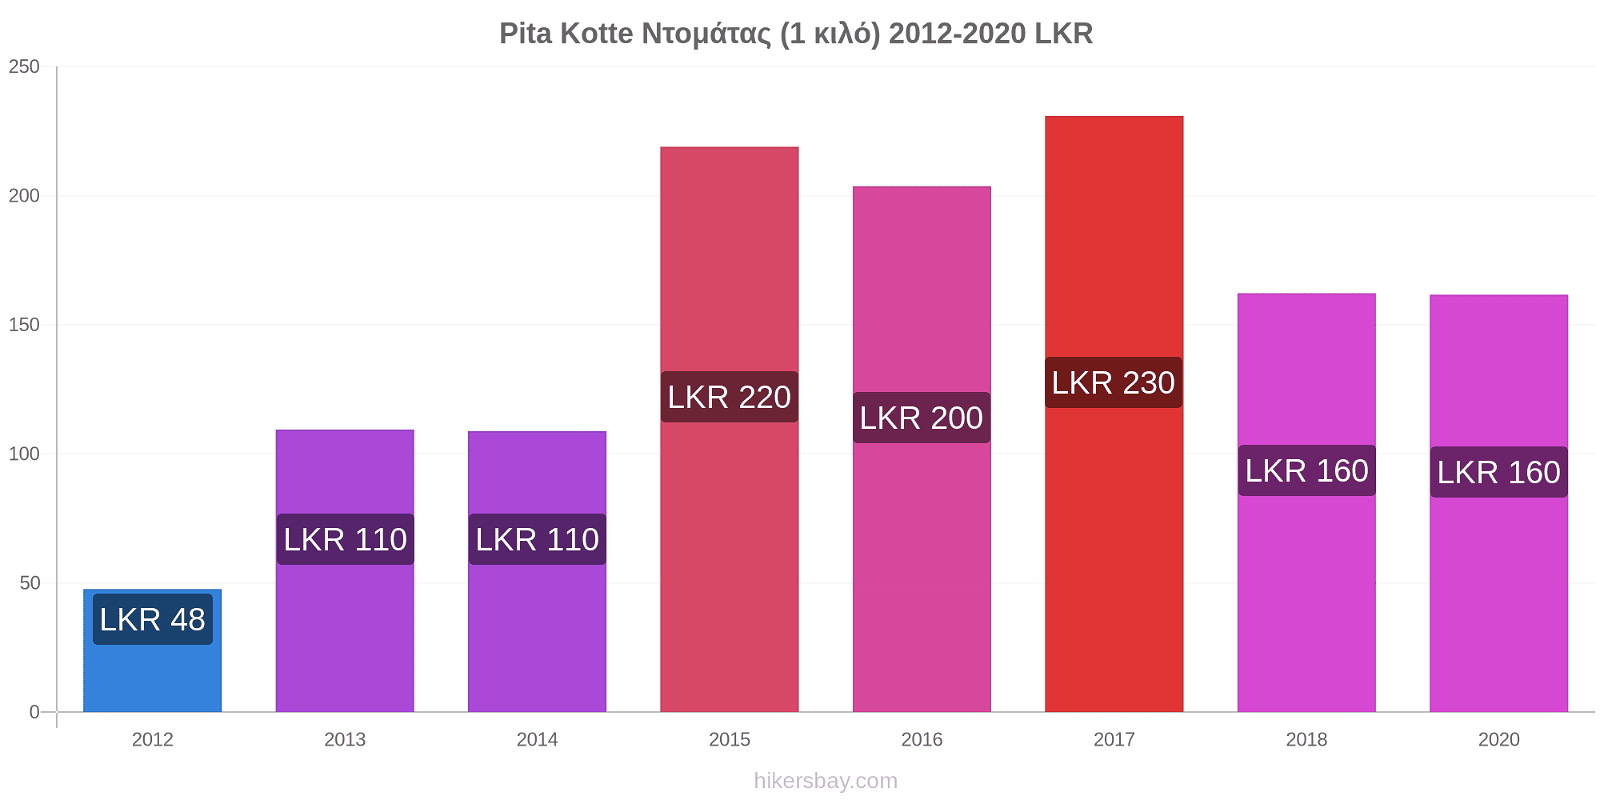 Pita Kotte αλλαγές τιμών Ντομάτας (1 κιλό) hikersbay.com